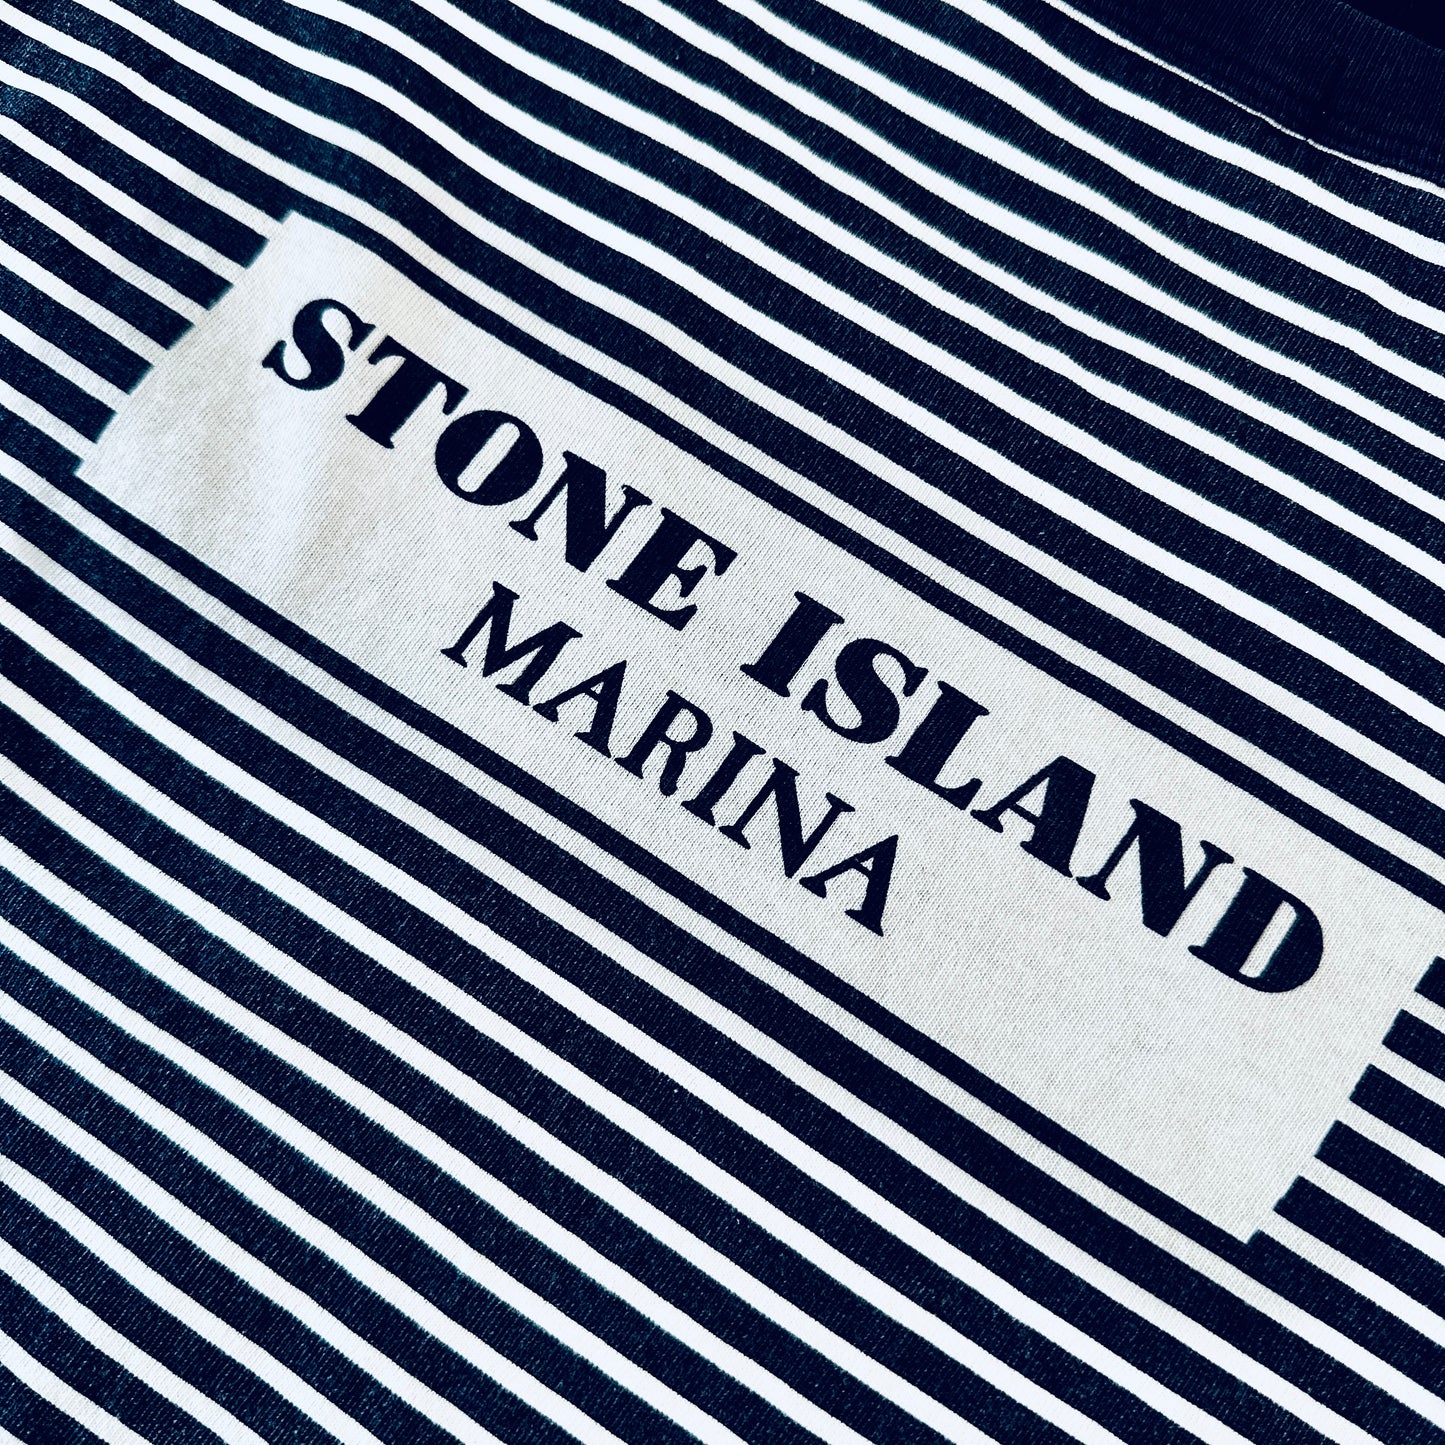 Stone Island Marina 2019 Navy Longsleeve T-Shirt - M